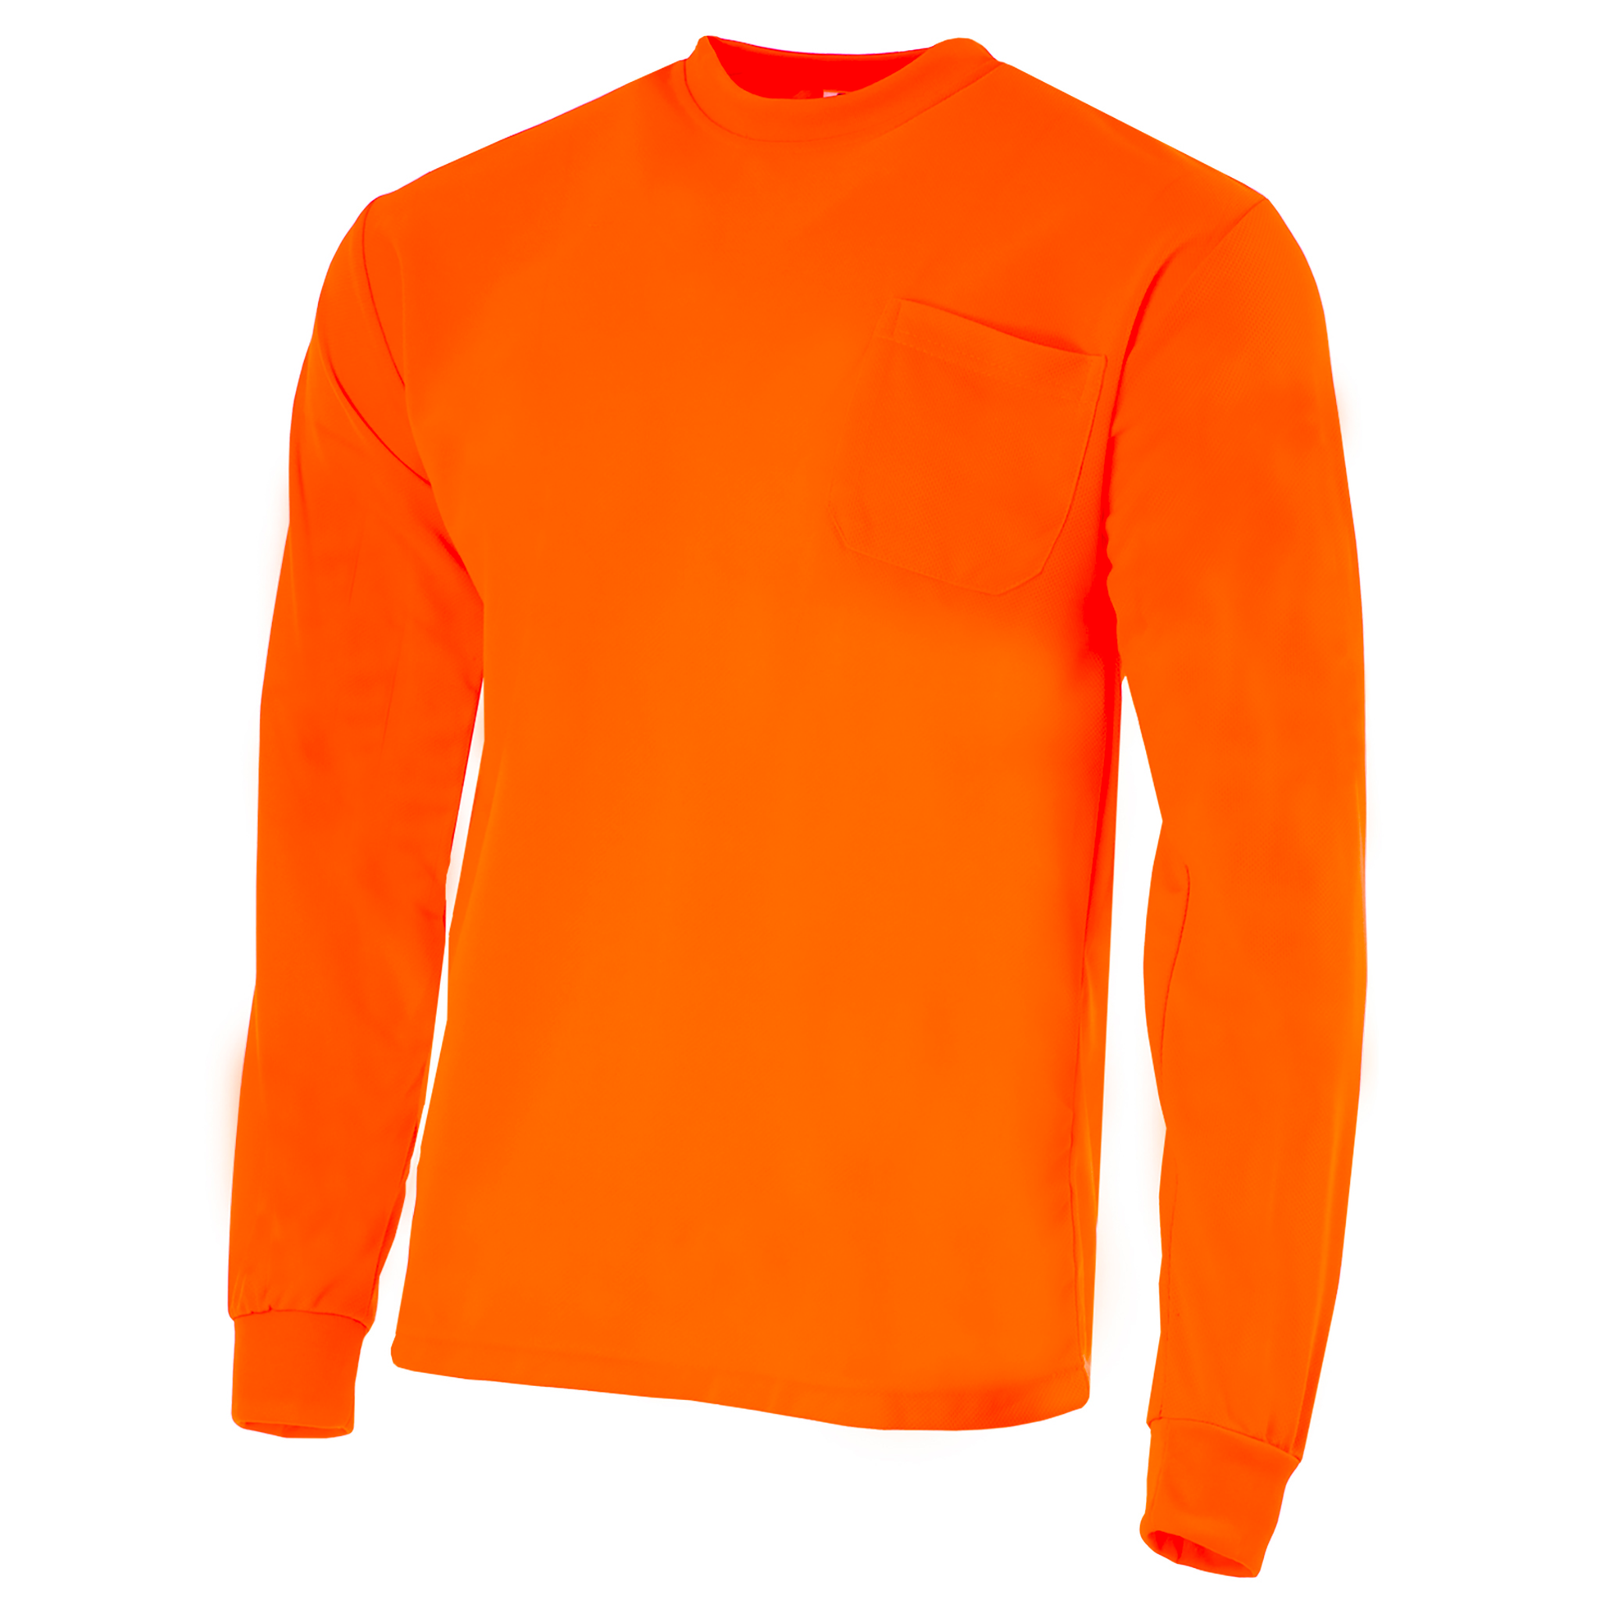 The Hi-vis safety long sleeve orange shirts